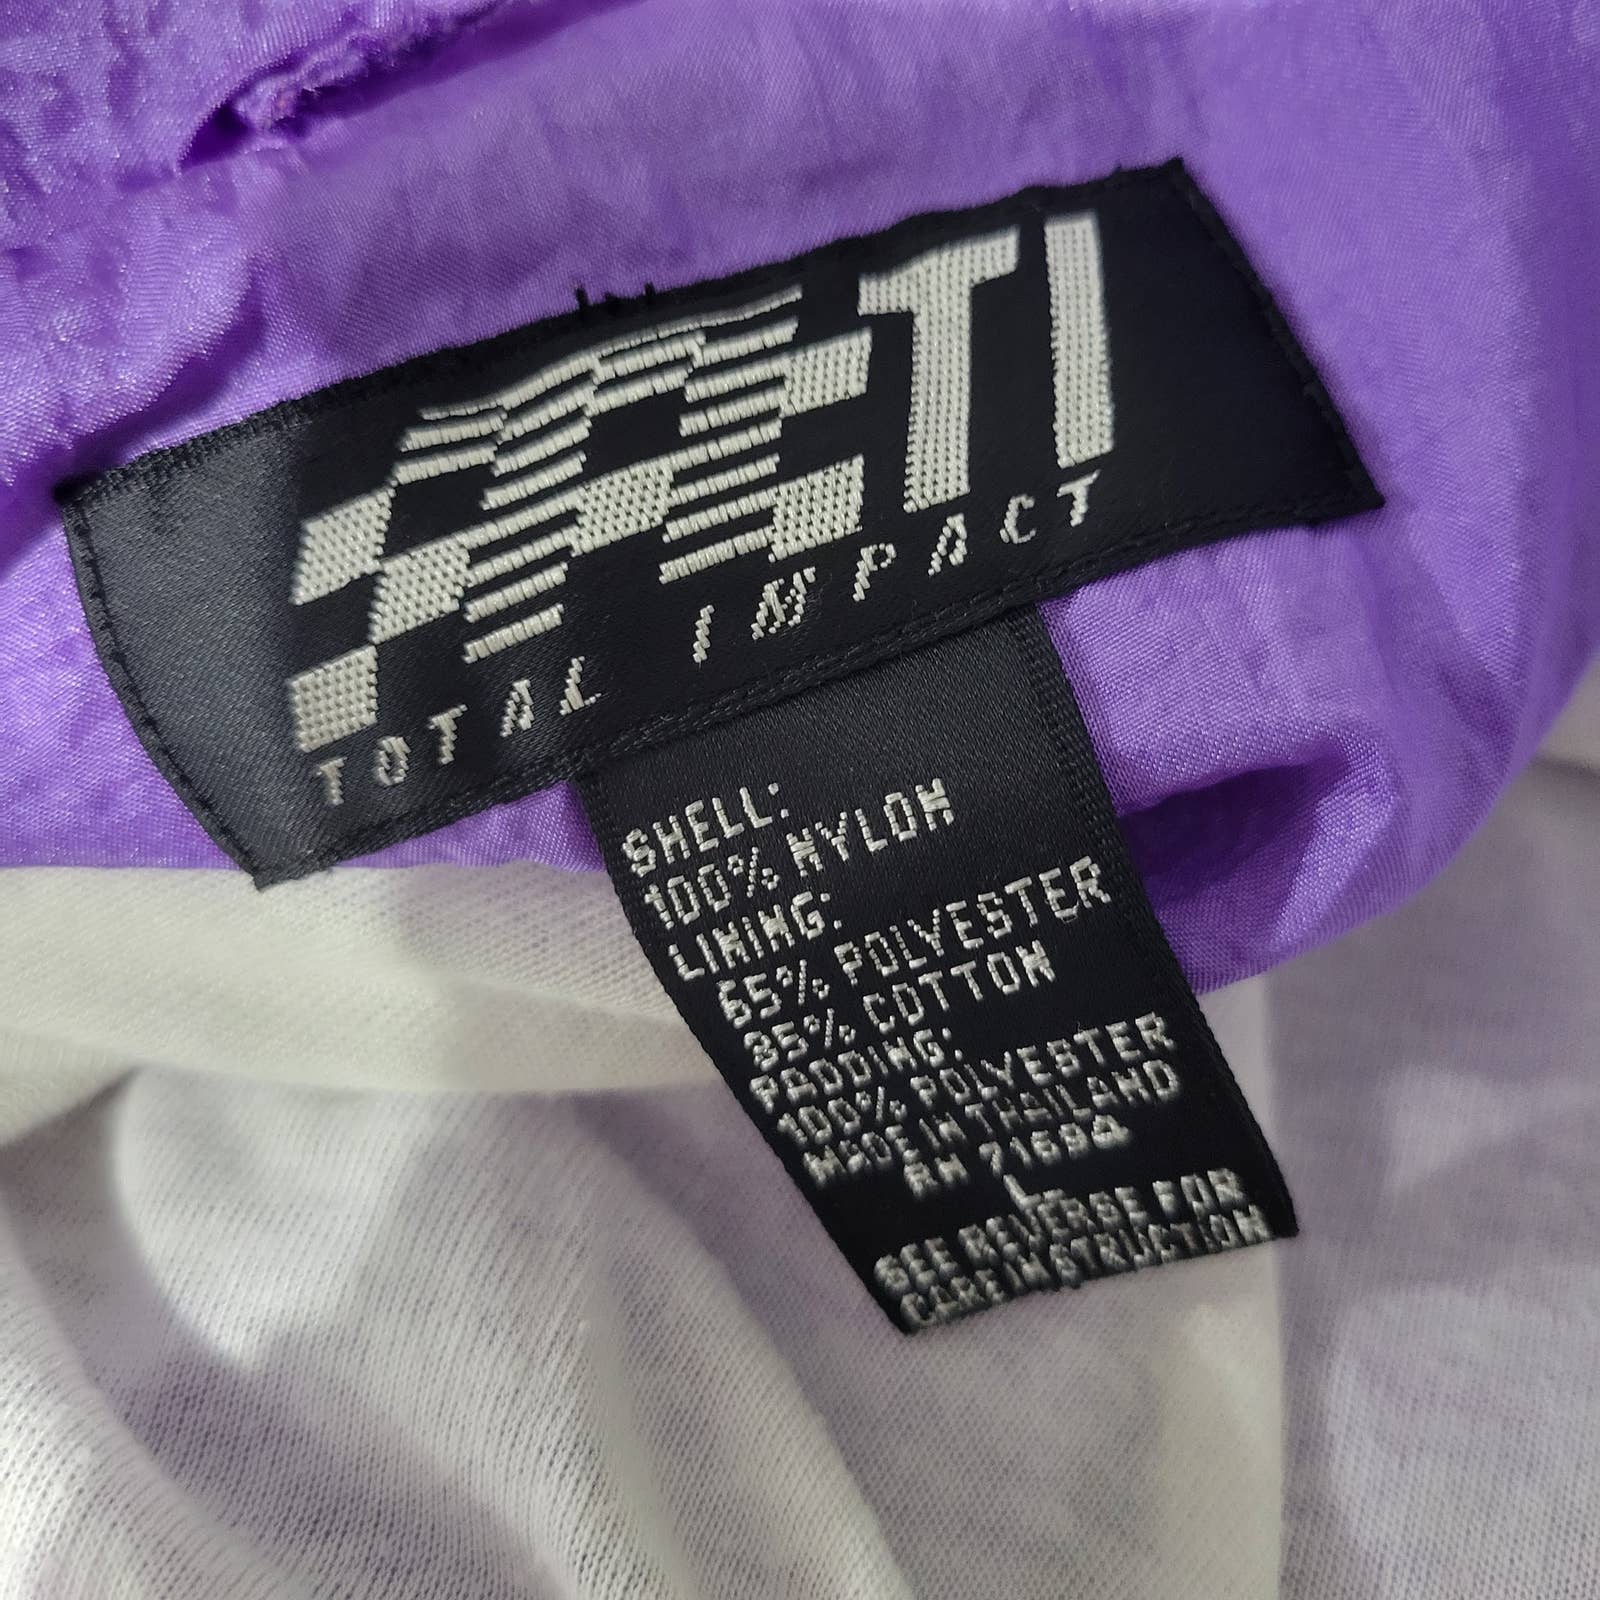 Vintage Nylon Track Suit CoOrd Pastel Purple Lilac Jacket Pant Jogger Set Large